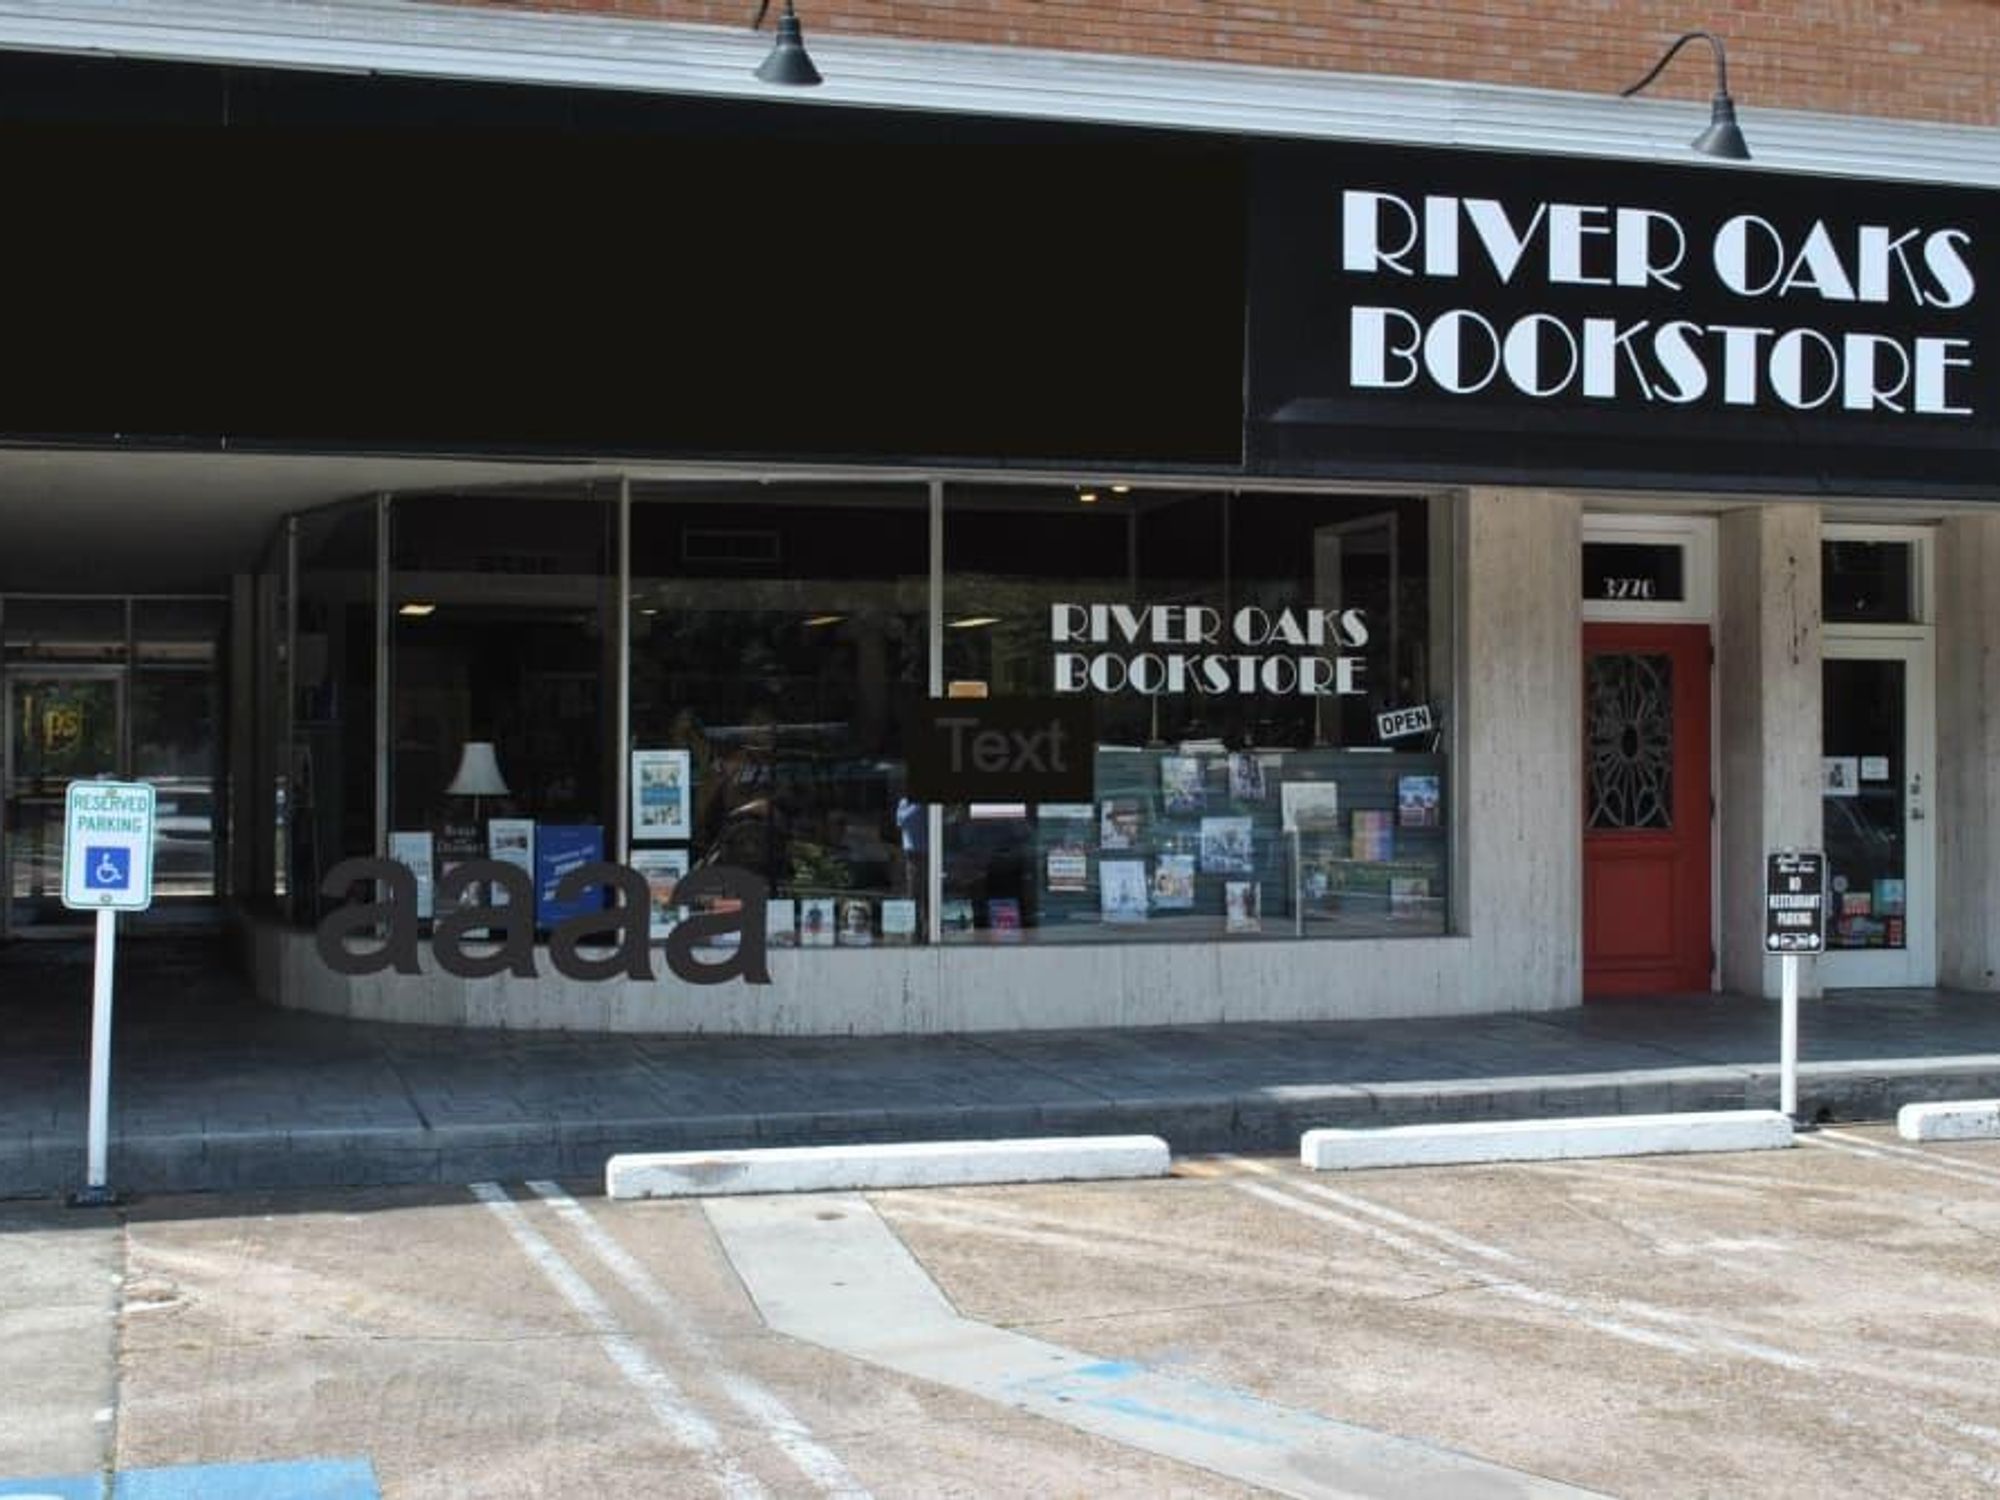 River Oaks Bookstore, exterior